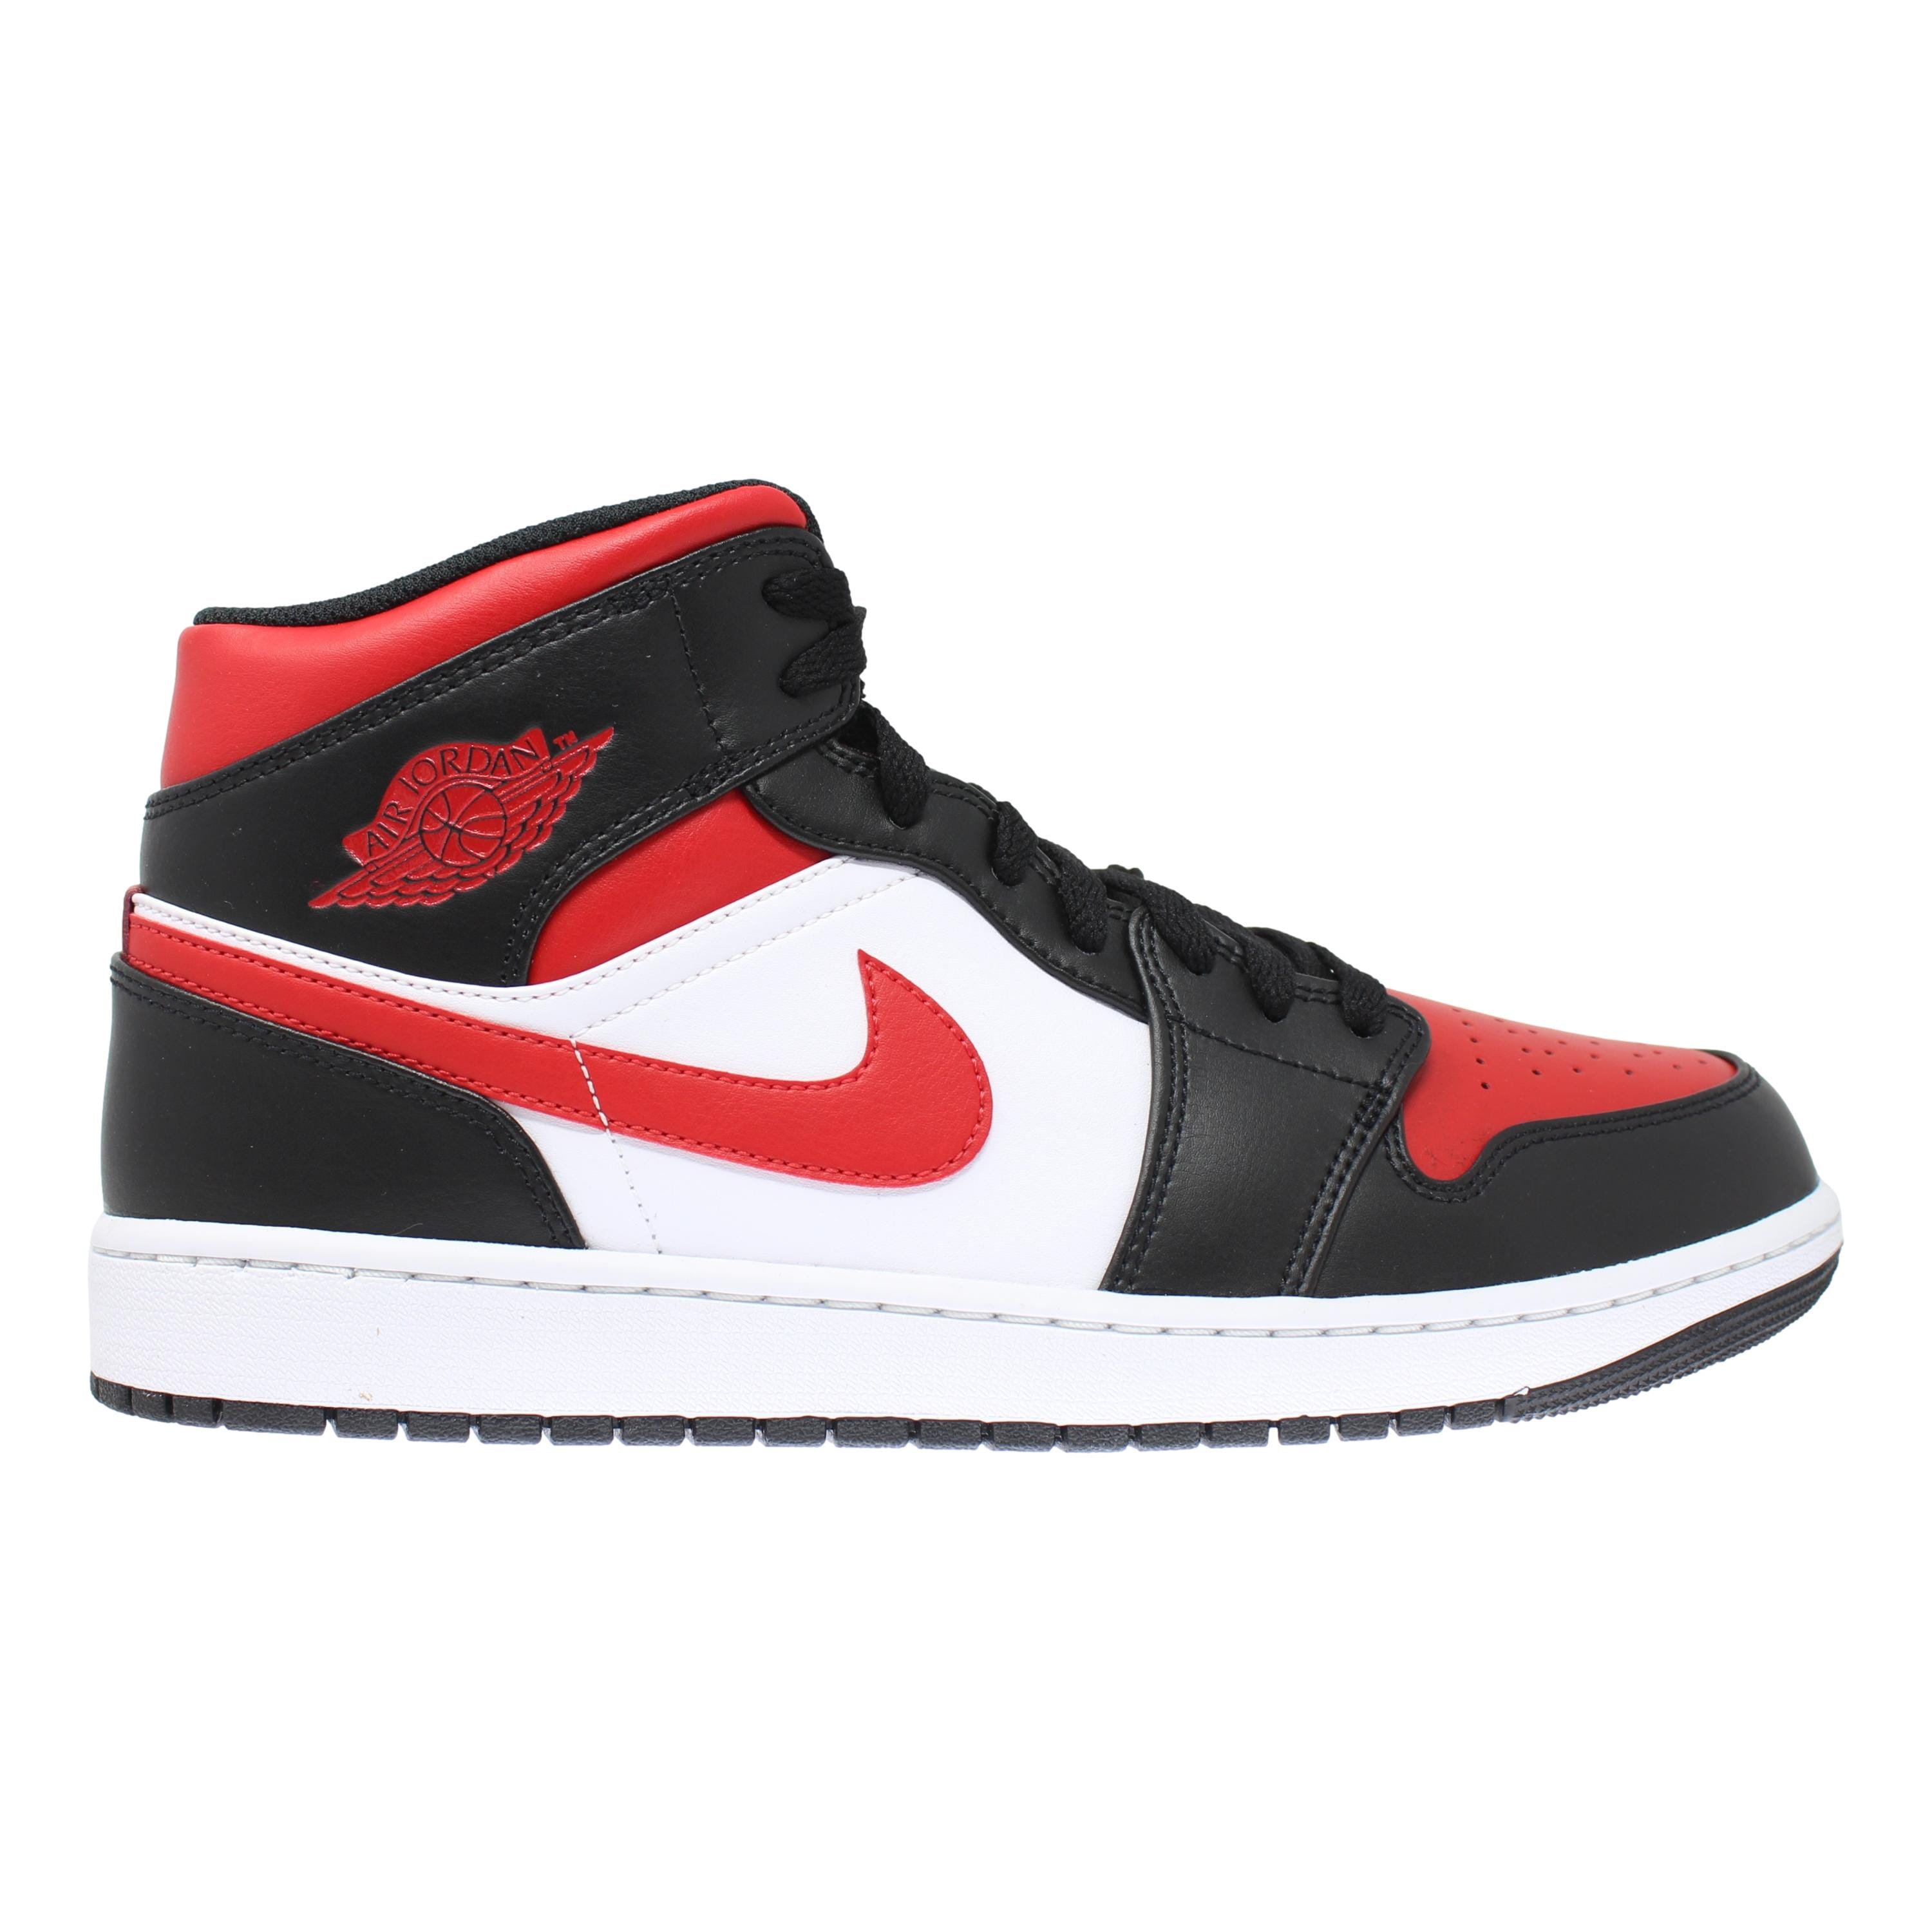 NIKE Nike Air Jordan 1 Mid Black/Fire Red-White Fire Red 554724-079 Men's